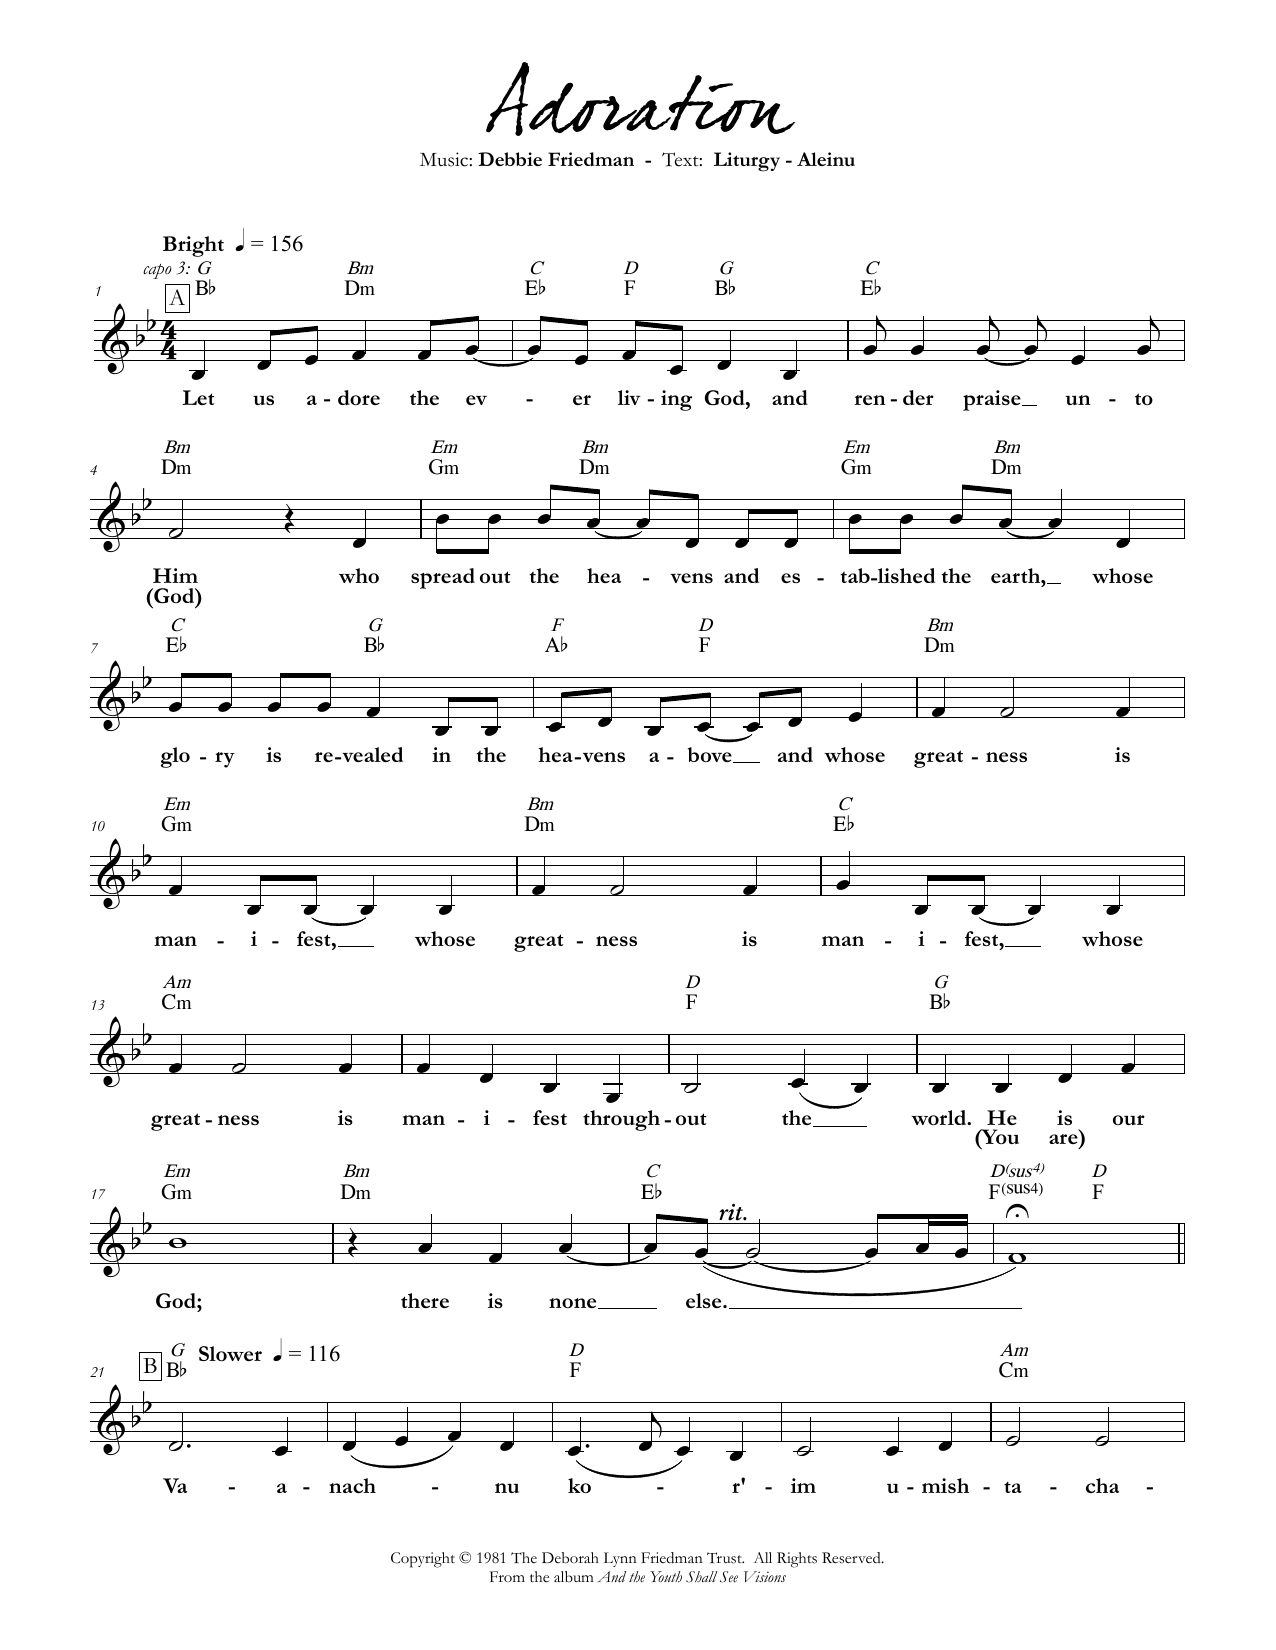 Debbie Friedman Adoration Sheet Music Notes & Chords for Lead Sheet / Fake Book - Download or Print PDF